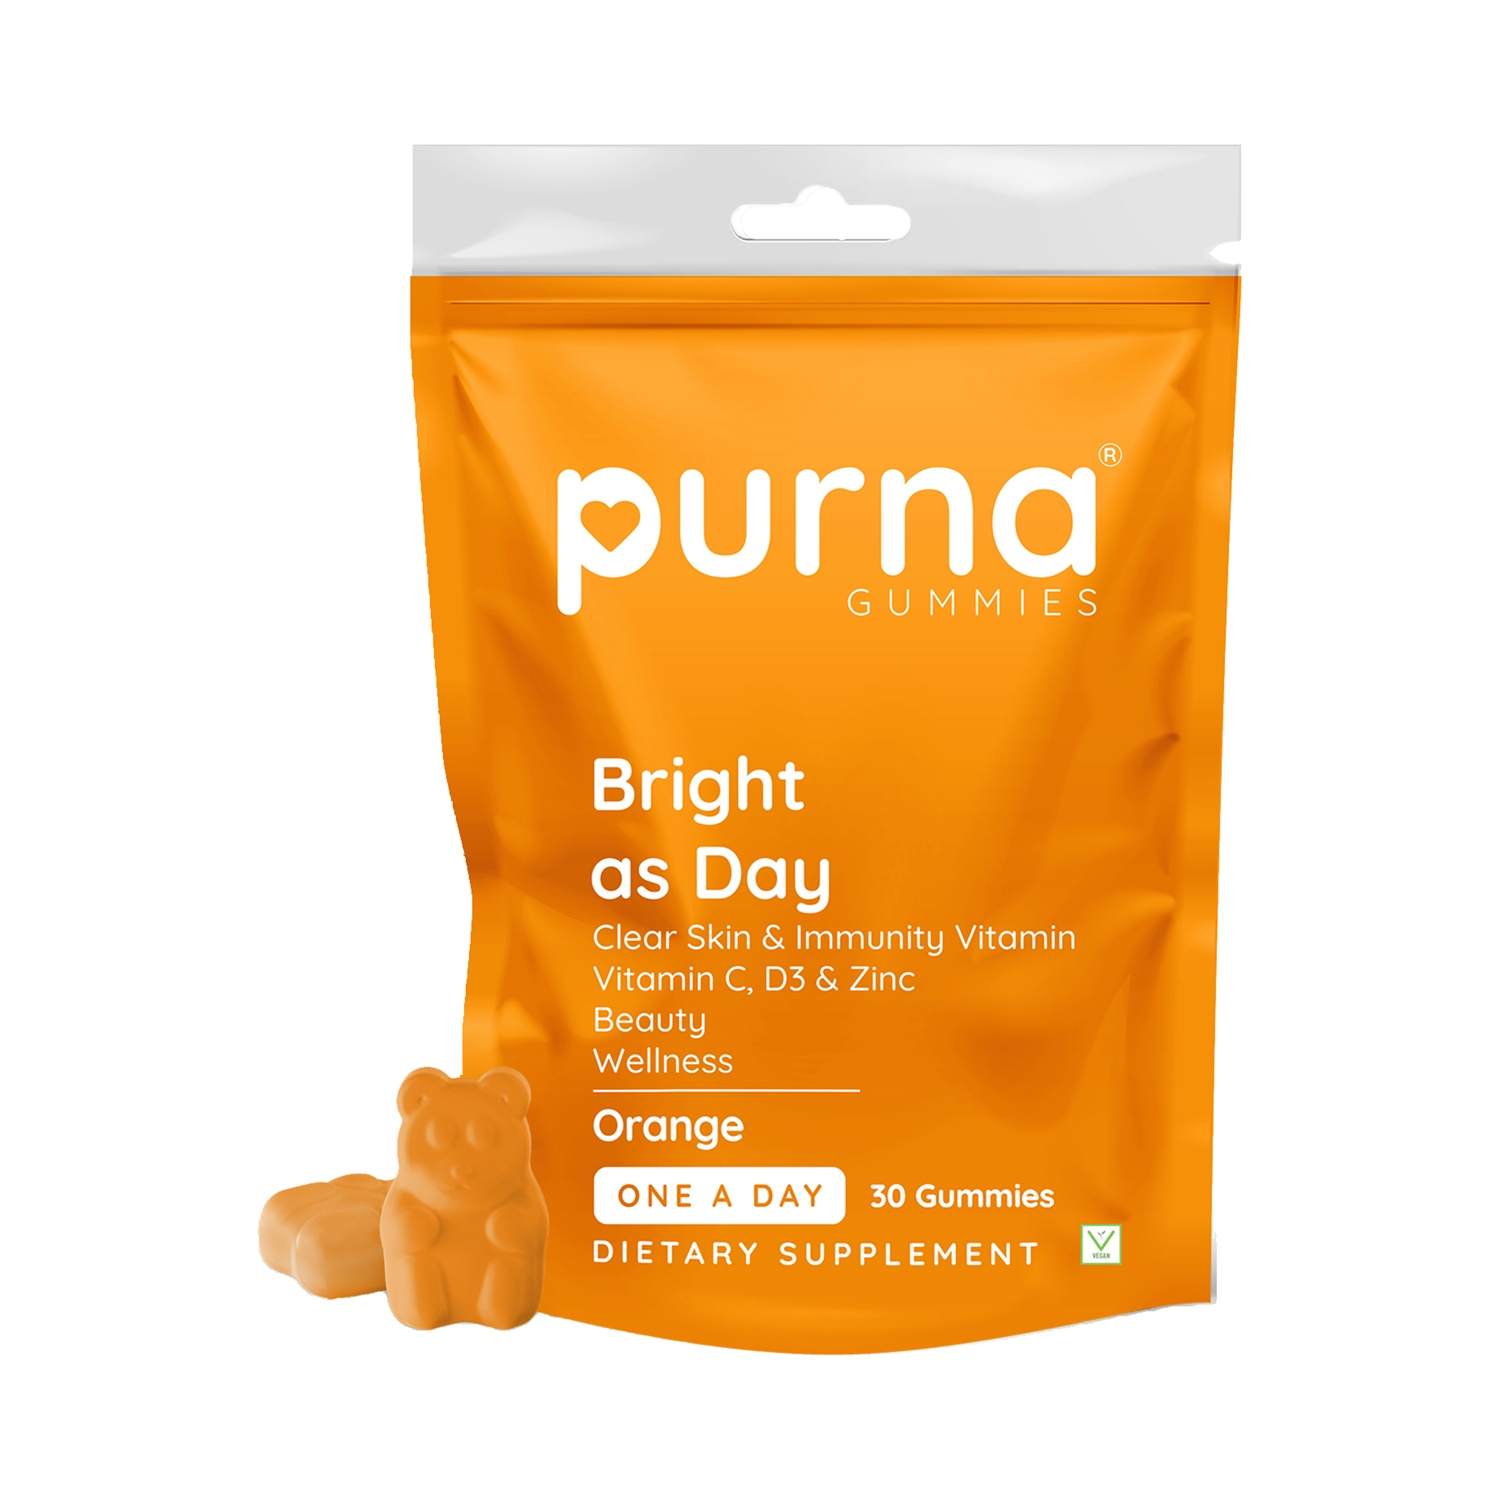 Purna Gummies | Purna Gummies Vitamin C Orange Gummies With Vitamin D3 And Zinc For Immunity & Clear Skin - (30 Pcs)